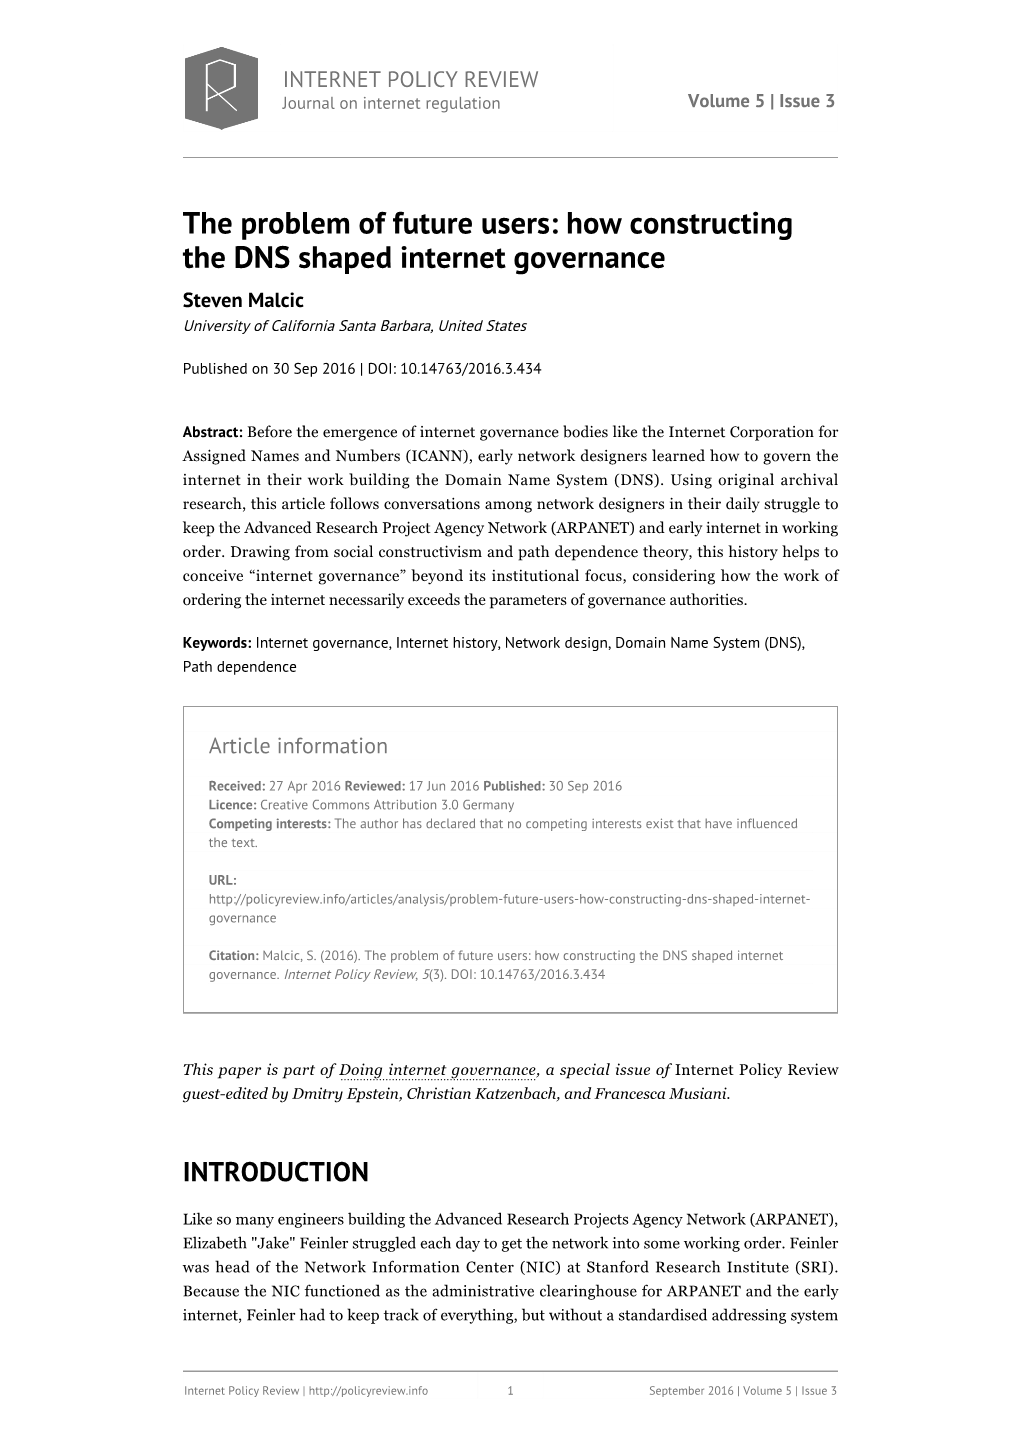 How Constructing the DNS Shaped Internet Governance Steven Malcic University of California Santa Barbara, United States